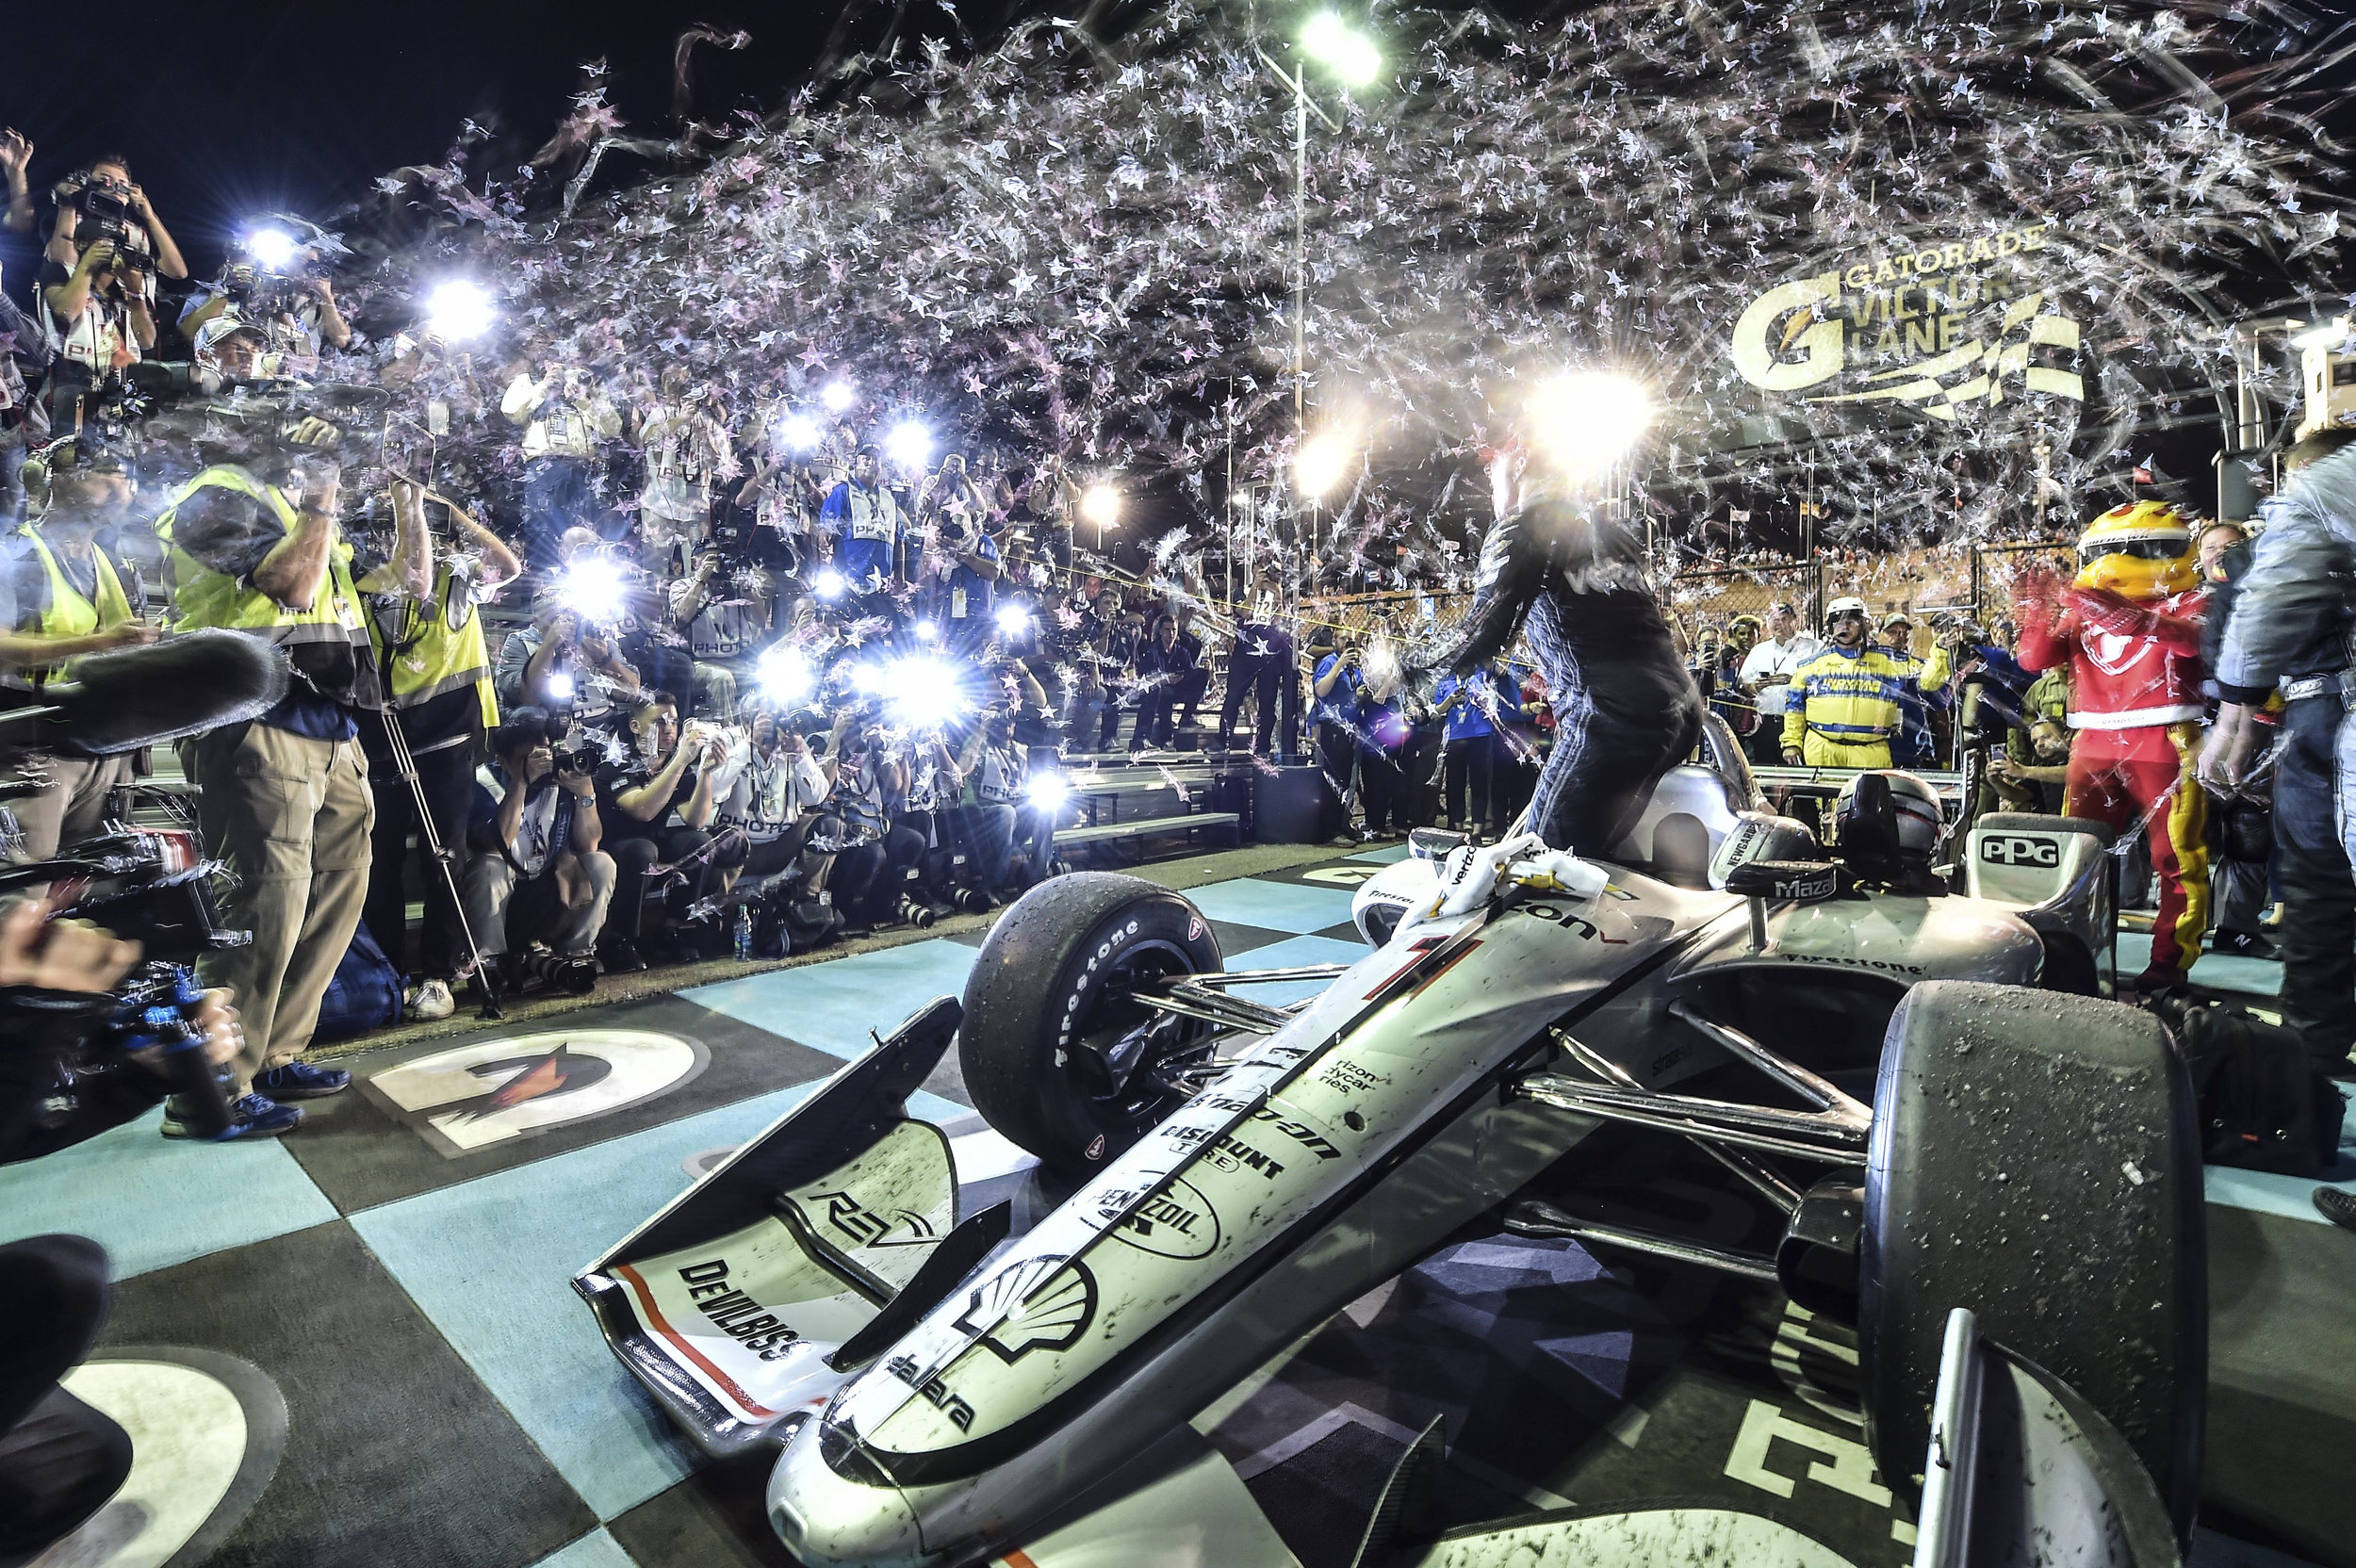  Lights, Camera, Action - Josef Newgarden wins at Phoenix 